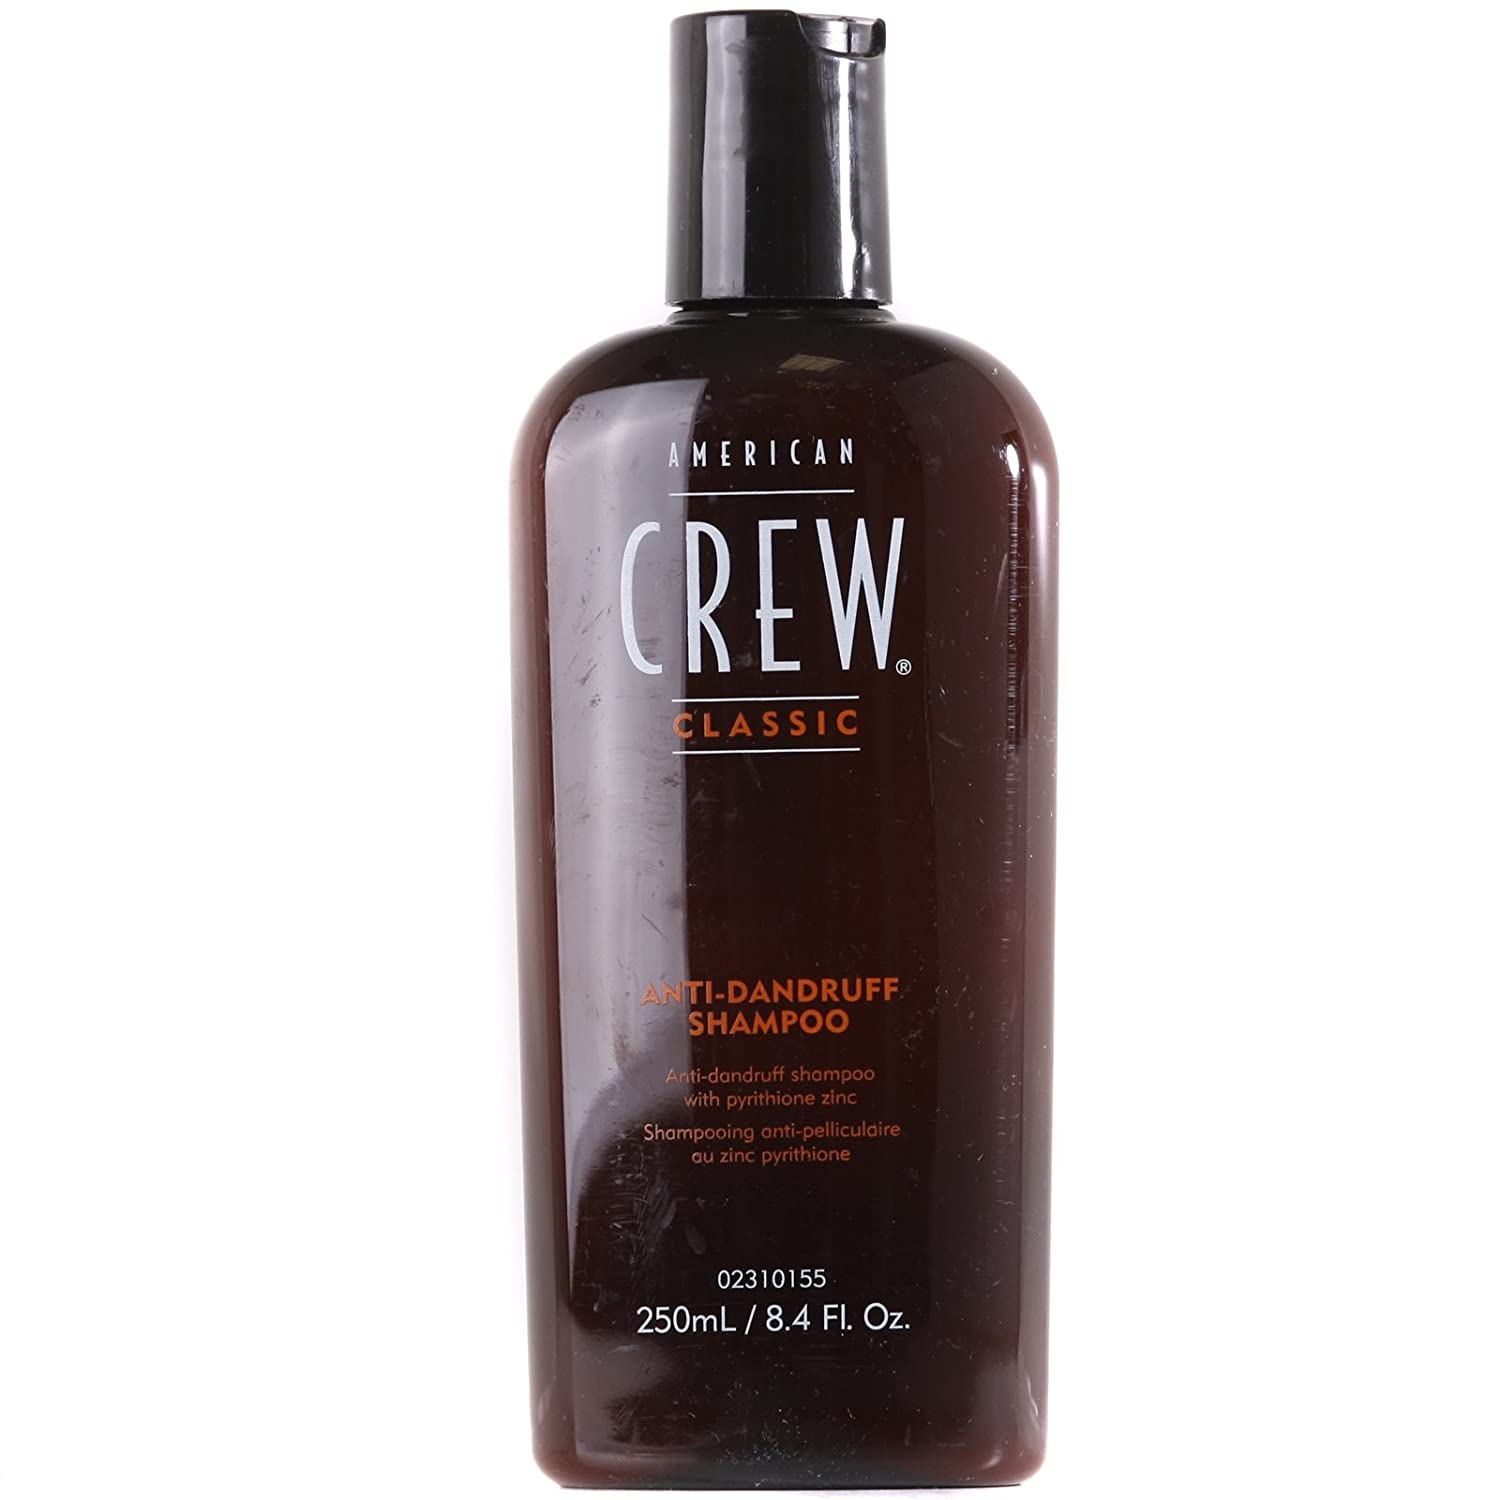 crew American Crew – Anti-Dandruff Shampoo 250ml